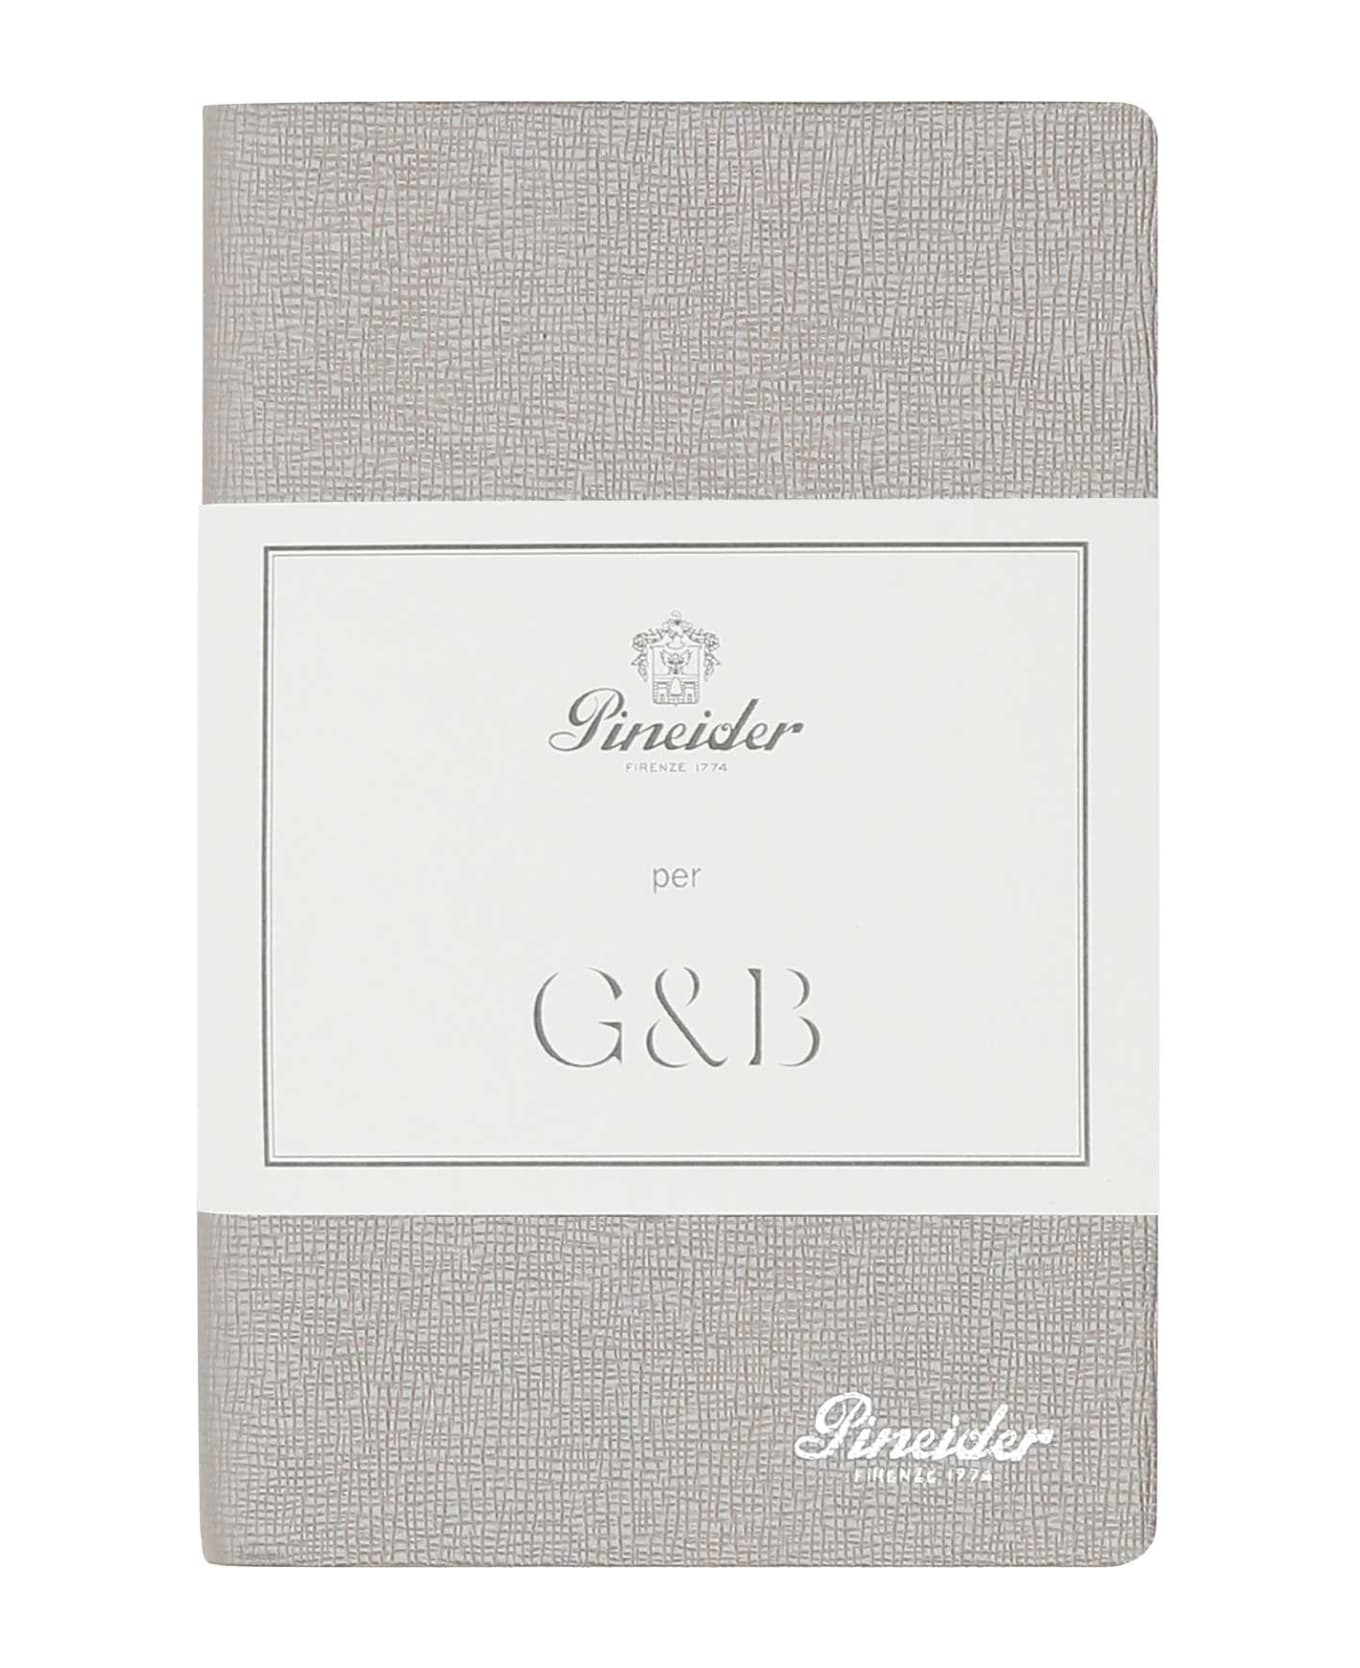 Pineider Grey Leather Milano Small Notebook - SILVER インテリア雑貨